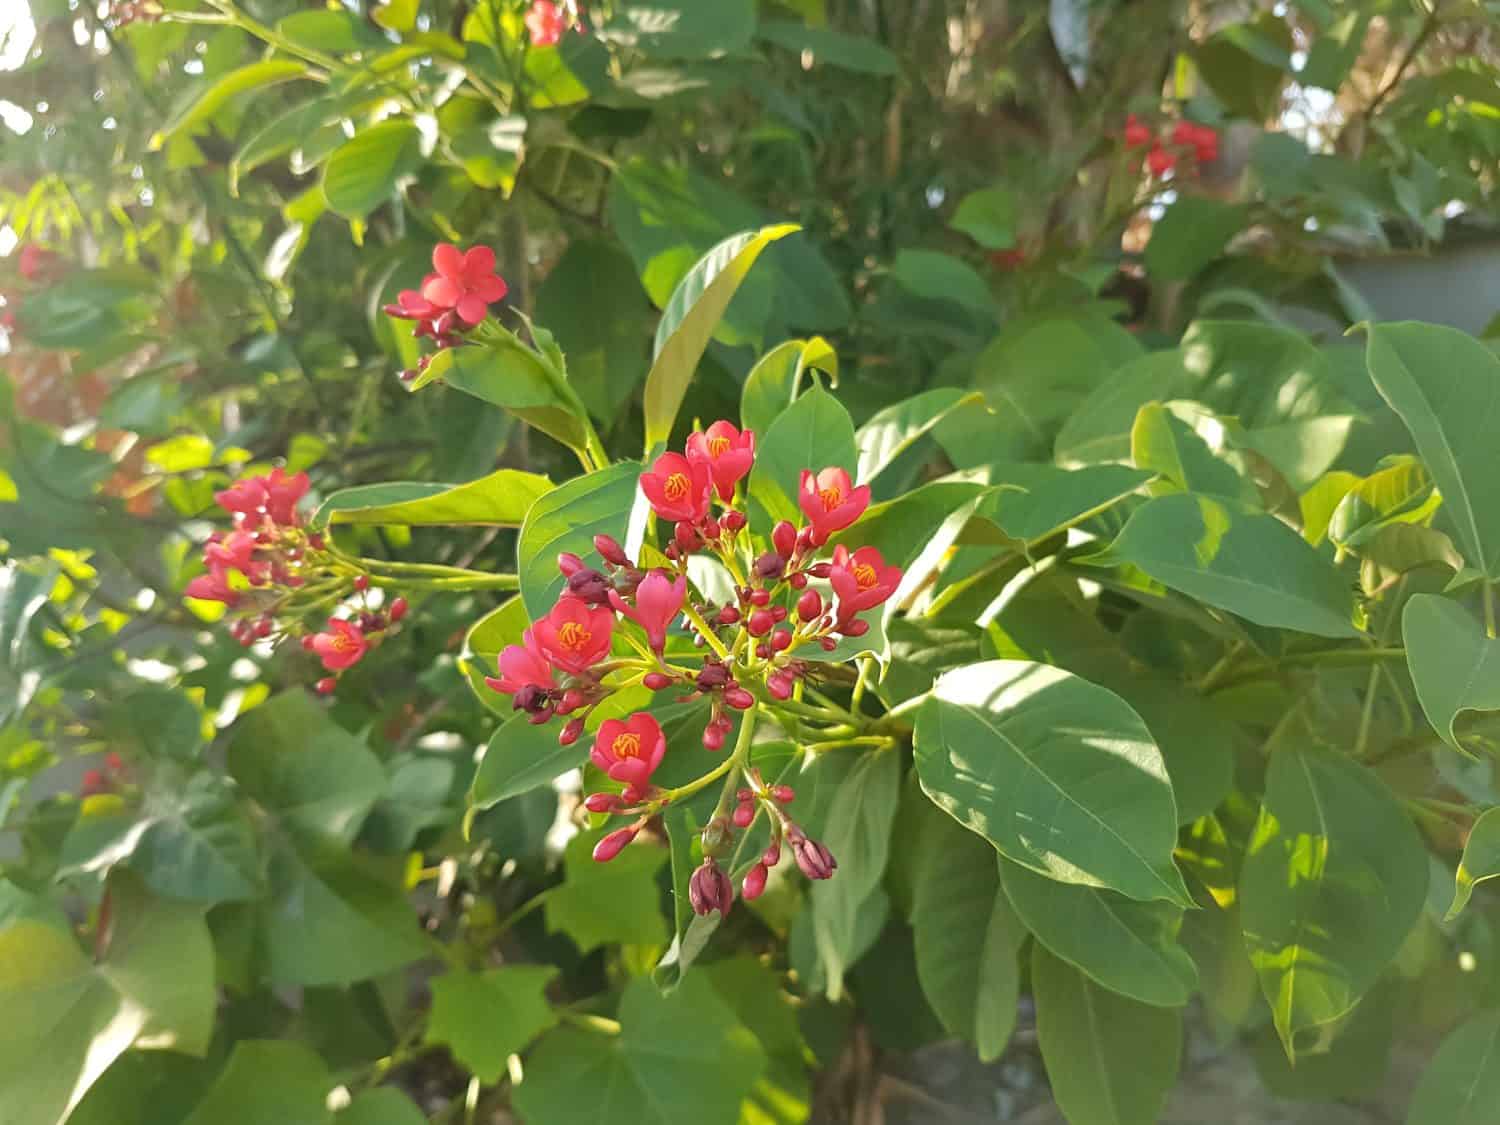 Peregrina (Jatropha integerrima) or also called Spicy Jatropha is a species of flowering plant from the Euphorbiaceae family.